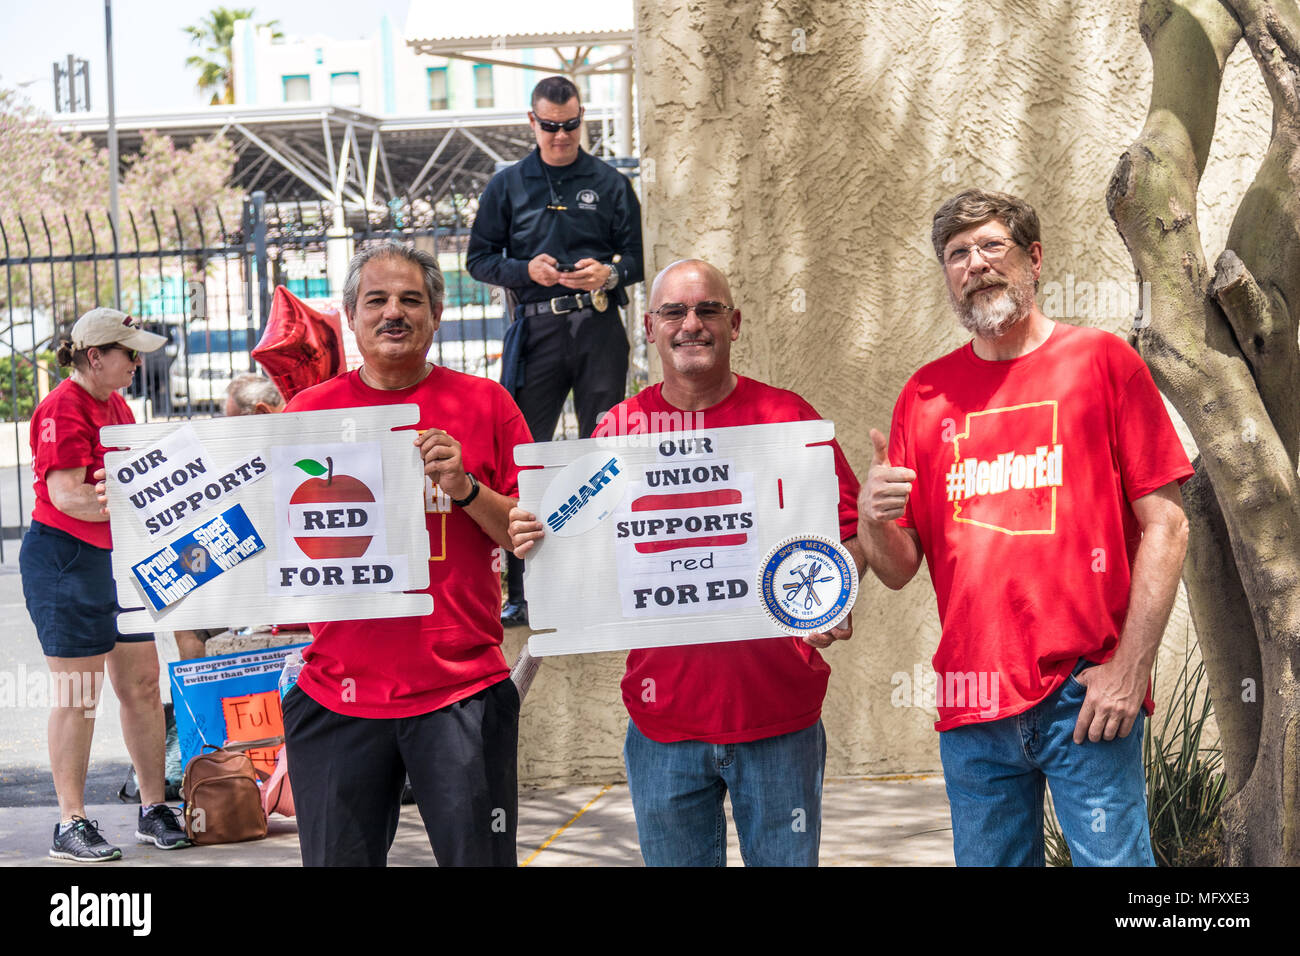 Phoenix, USA, 26 avril 2018, le n° RedForEd - Mars Notre syndicat appuie' REDforED. Credit : Michelle Jones - Arizona/Alamy Live News. Banque D'Images